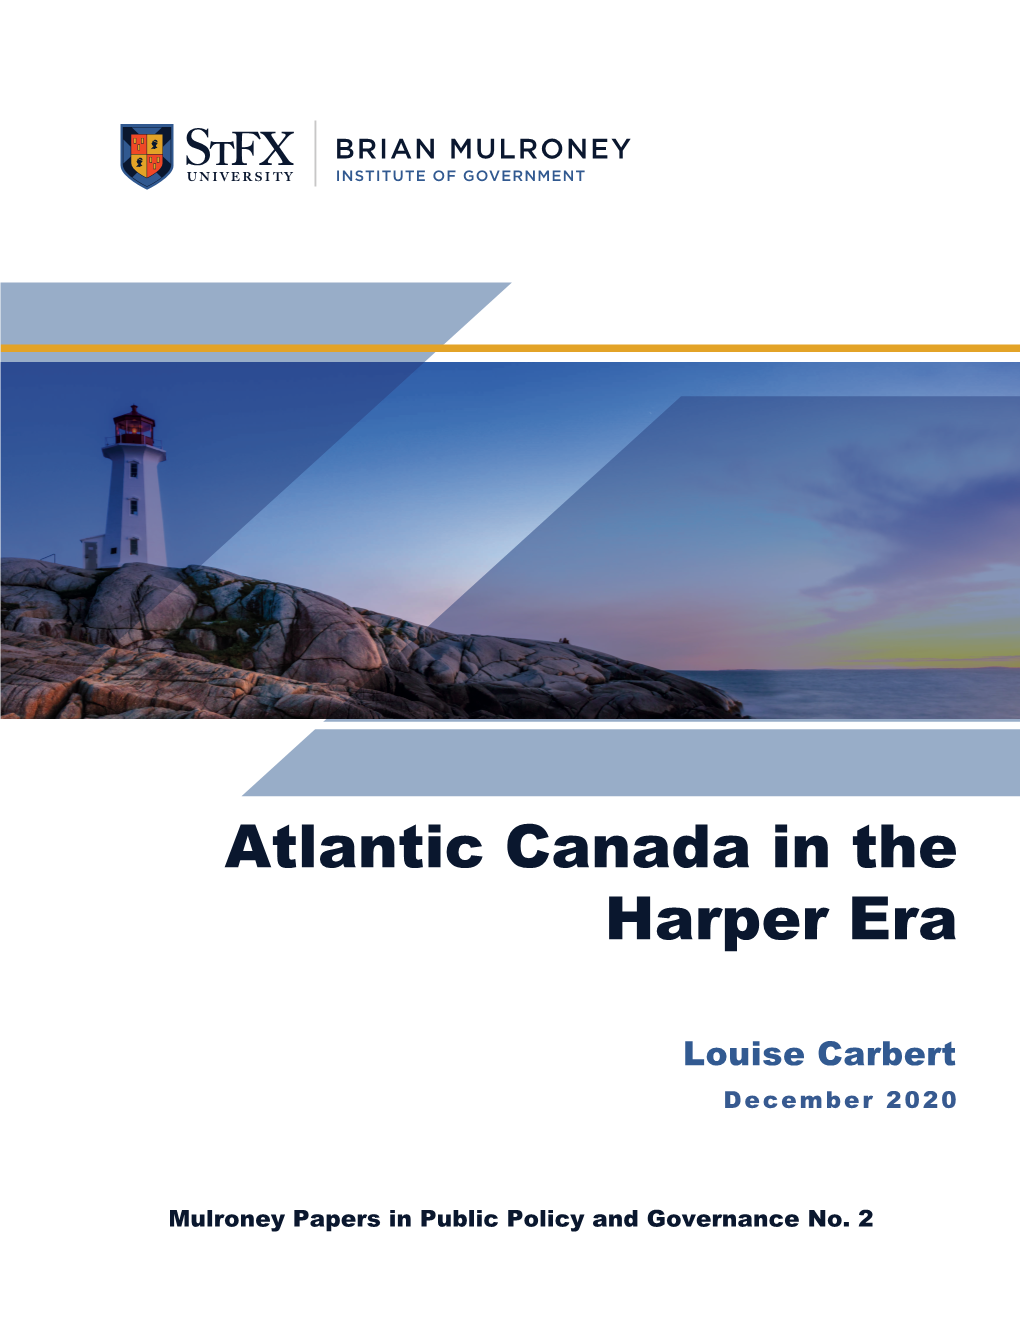 Atlantic Canada in the Harper Era